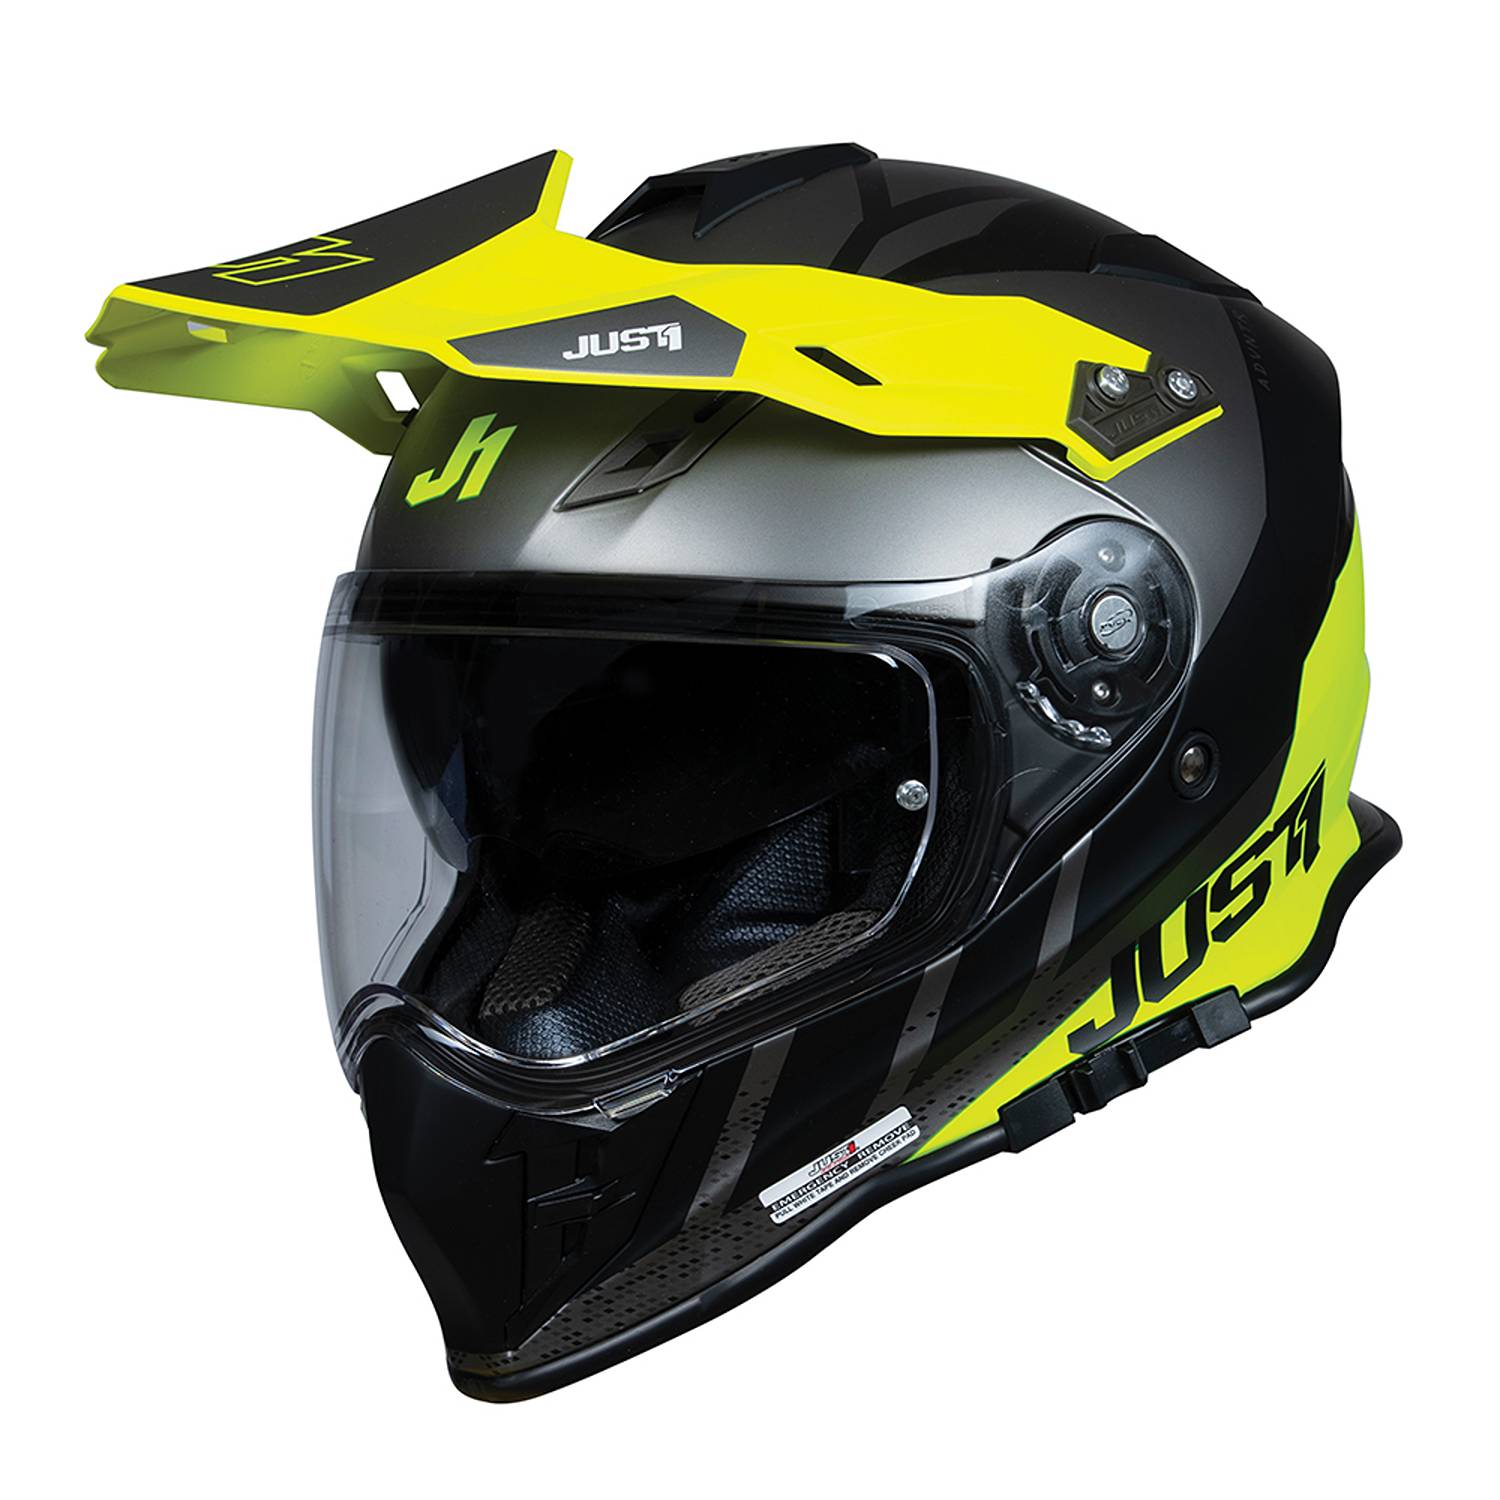 Just1 Helmet J34 Pro Outerspace Yellow Fluo Titanium Adventure Helmet Size S